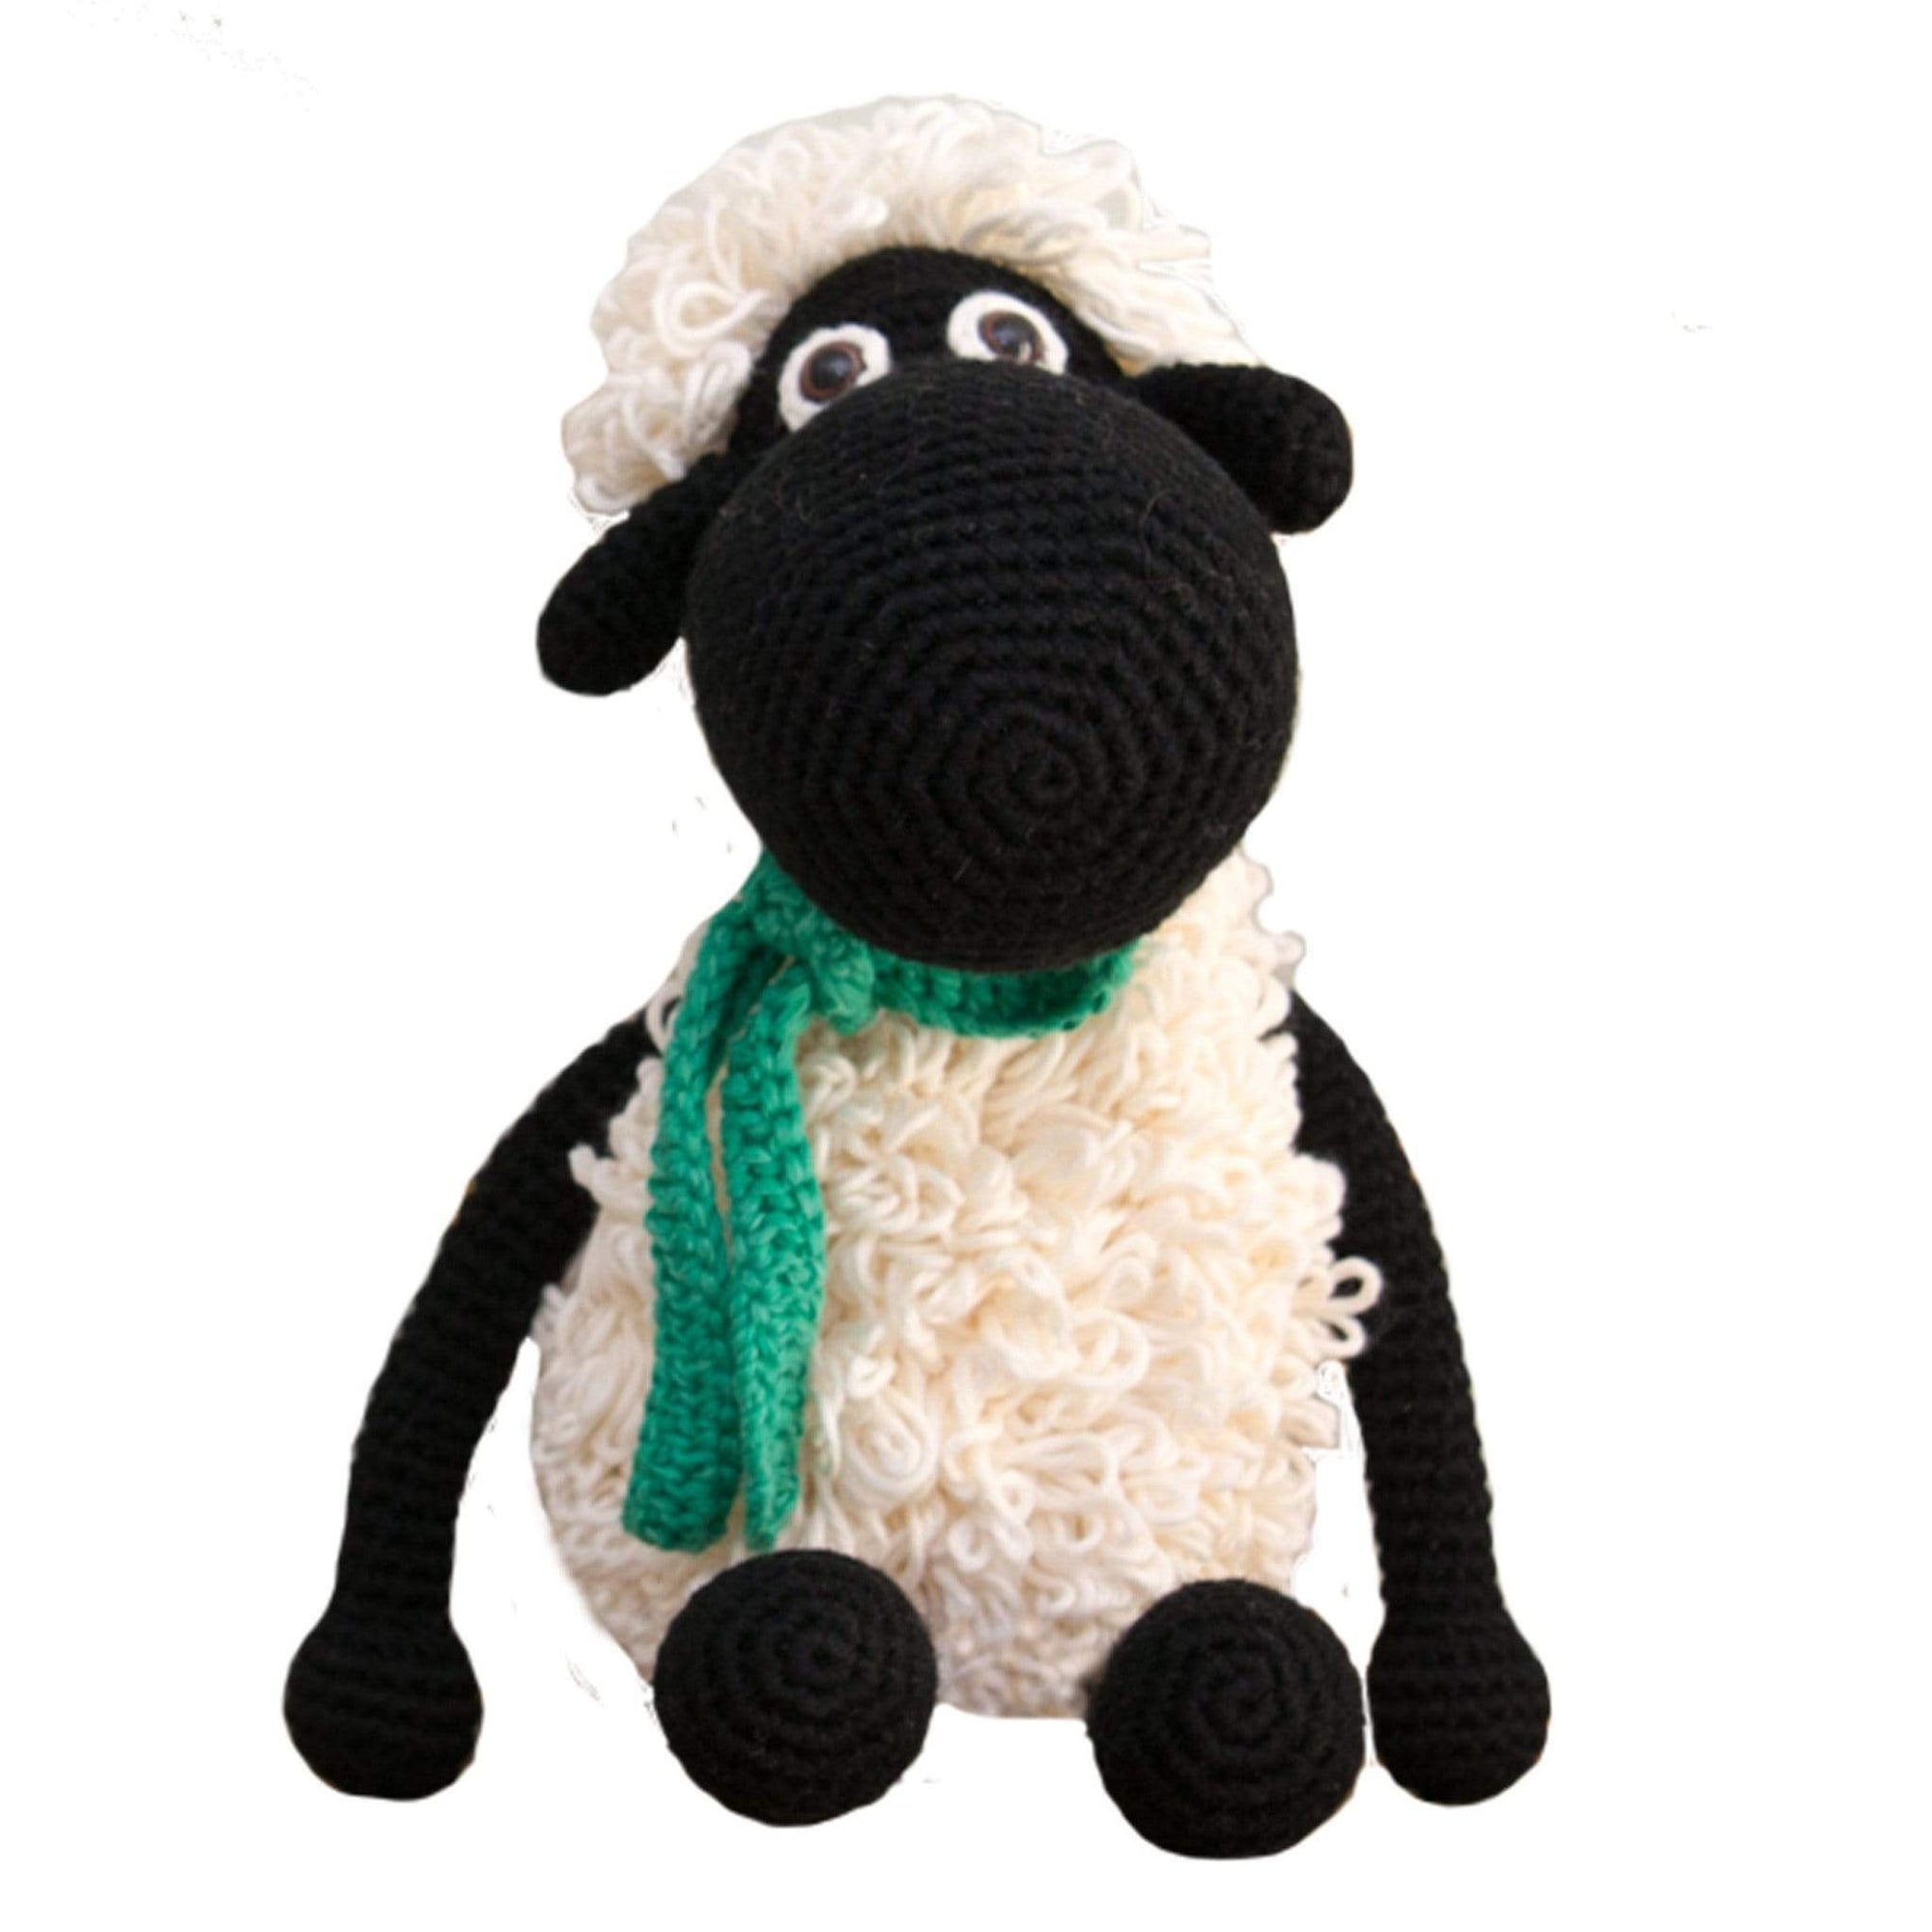 bebemoss.com stuffed animal Darla the sheep - black handmade by moms  gifts with purpose